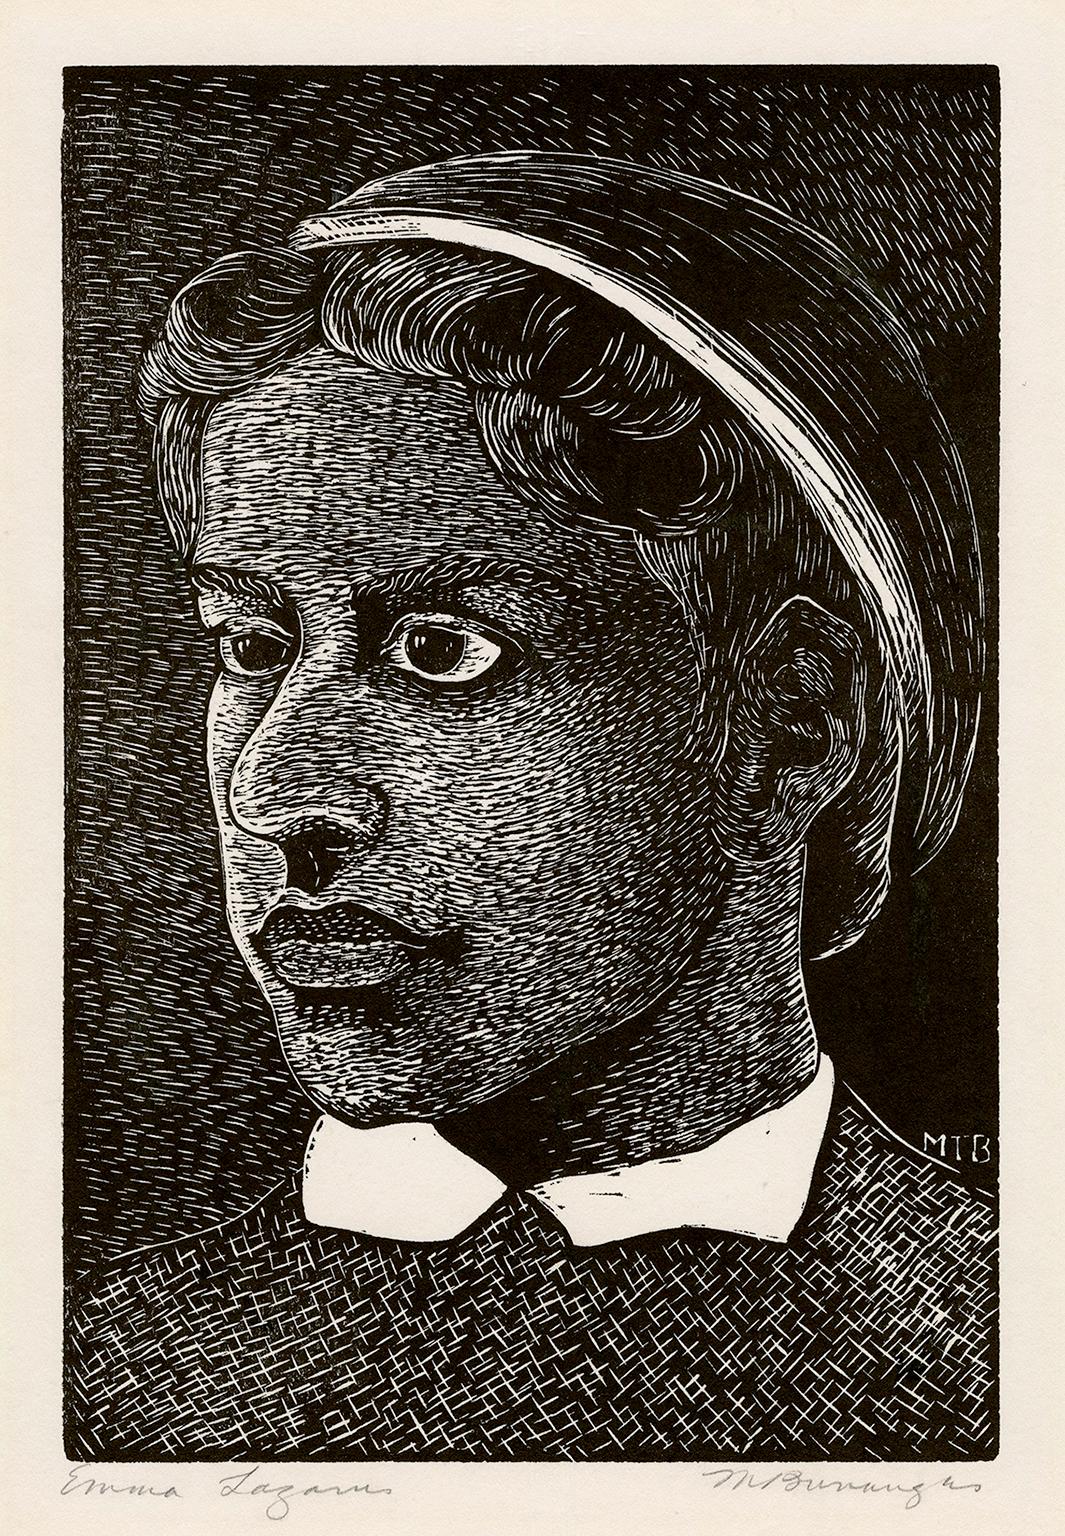 Margaret Burroughs Portrait Print - 'Emma Lazarus' — African American Artist